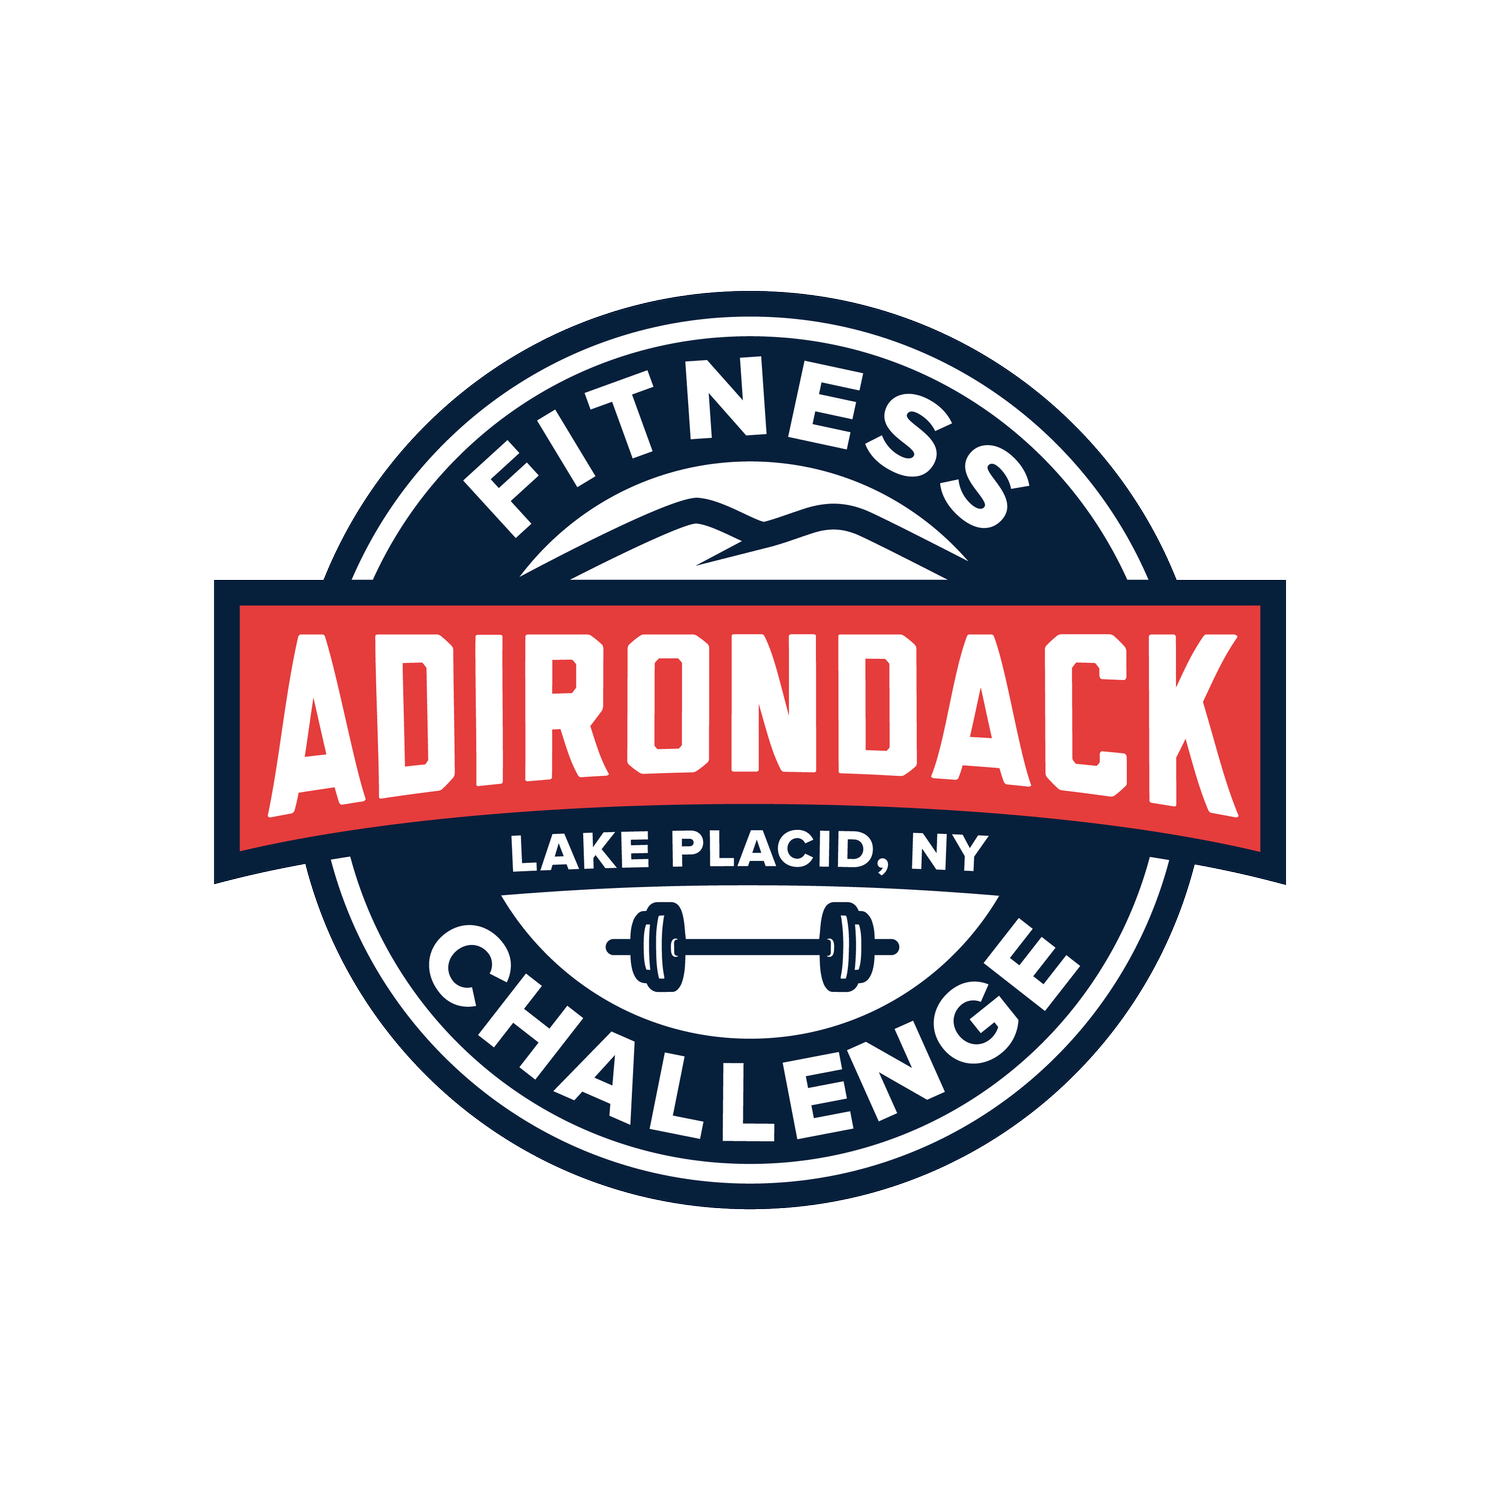 Adirondack Fitness Challenge